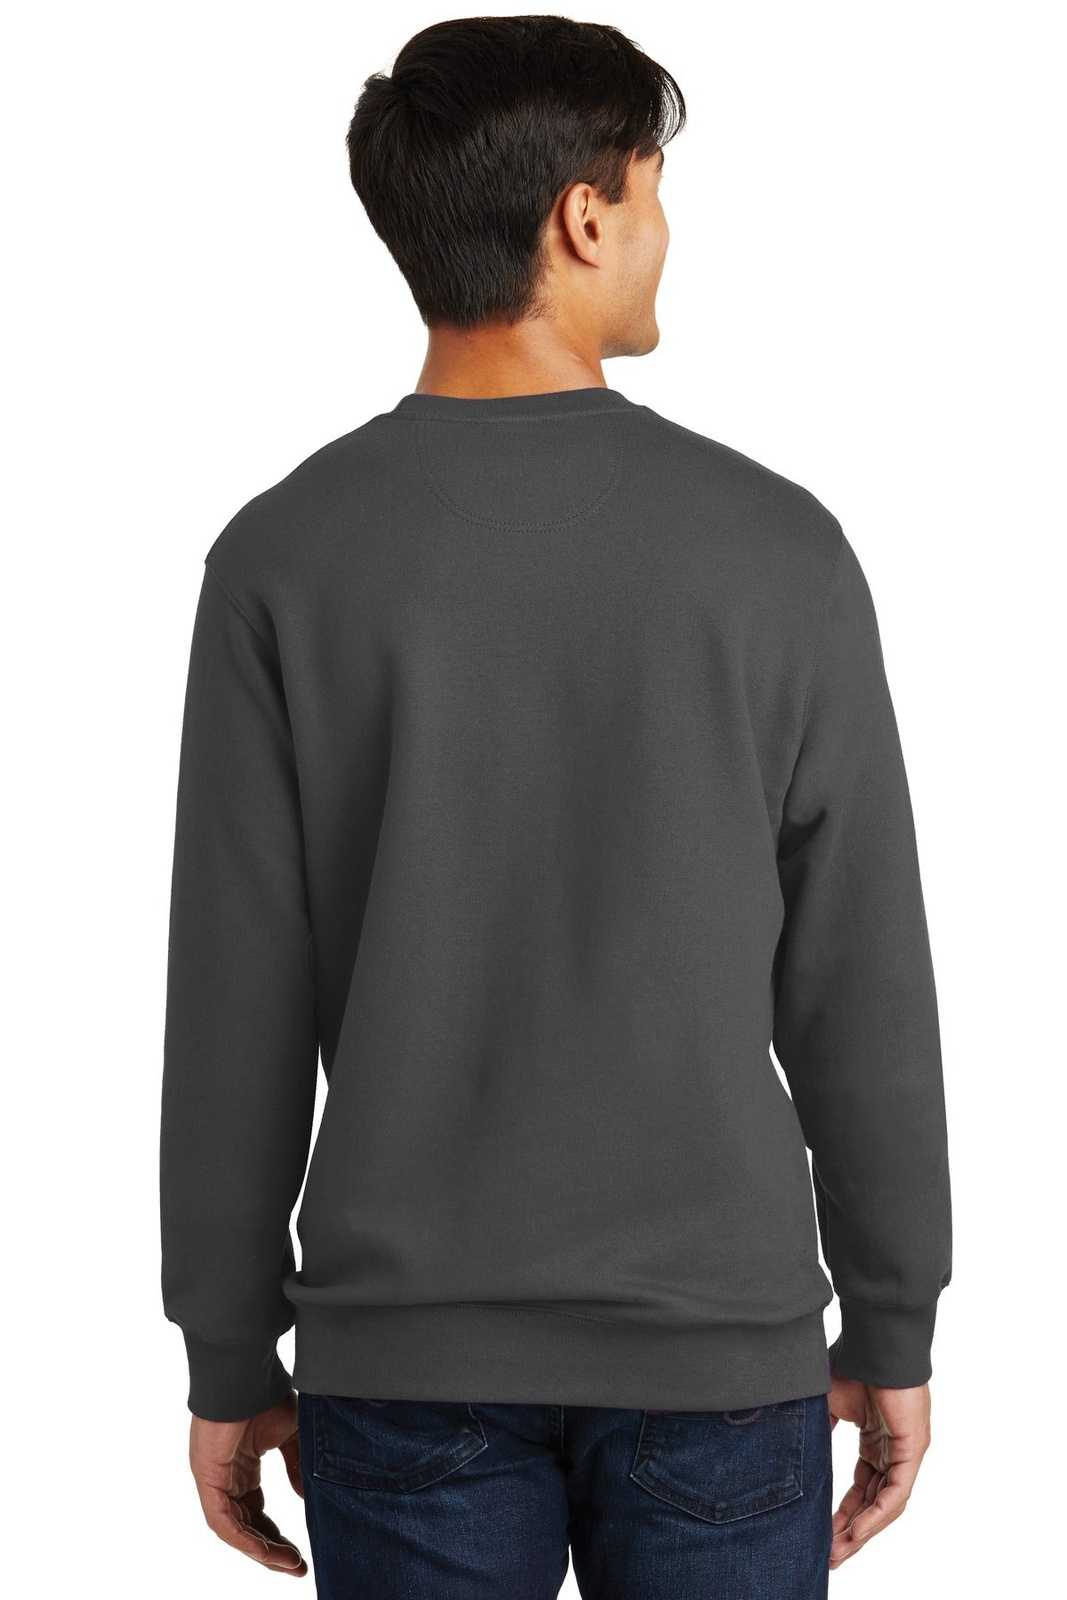 Port &amp; Company PC850 Fan Favorite Fleece Crewneck Sweatshirt - Charcoal - HIT a Double - 2